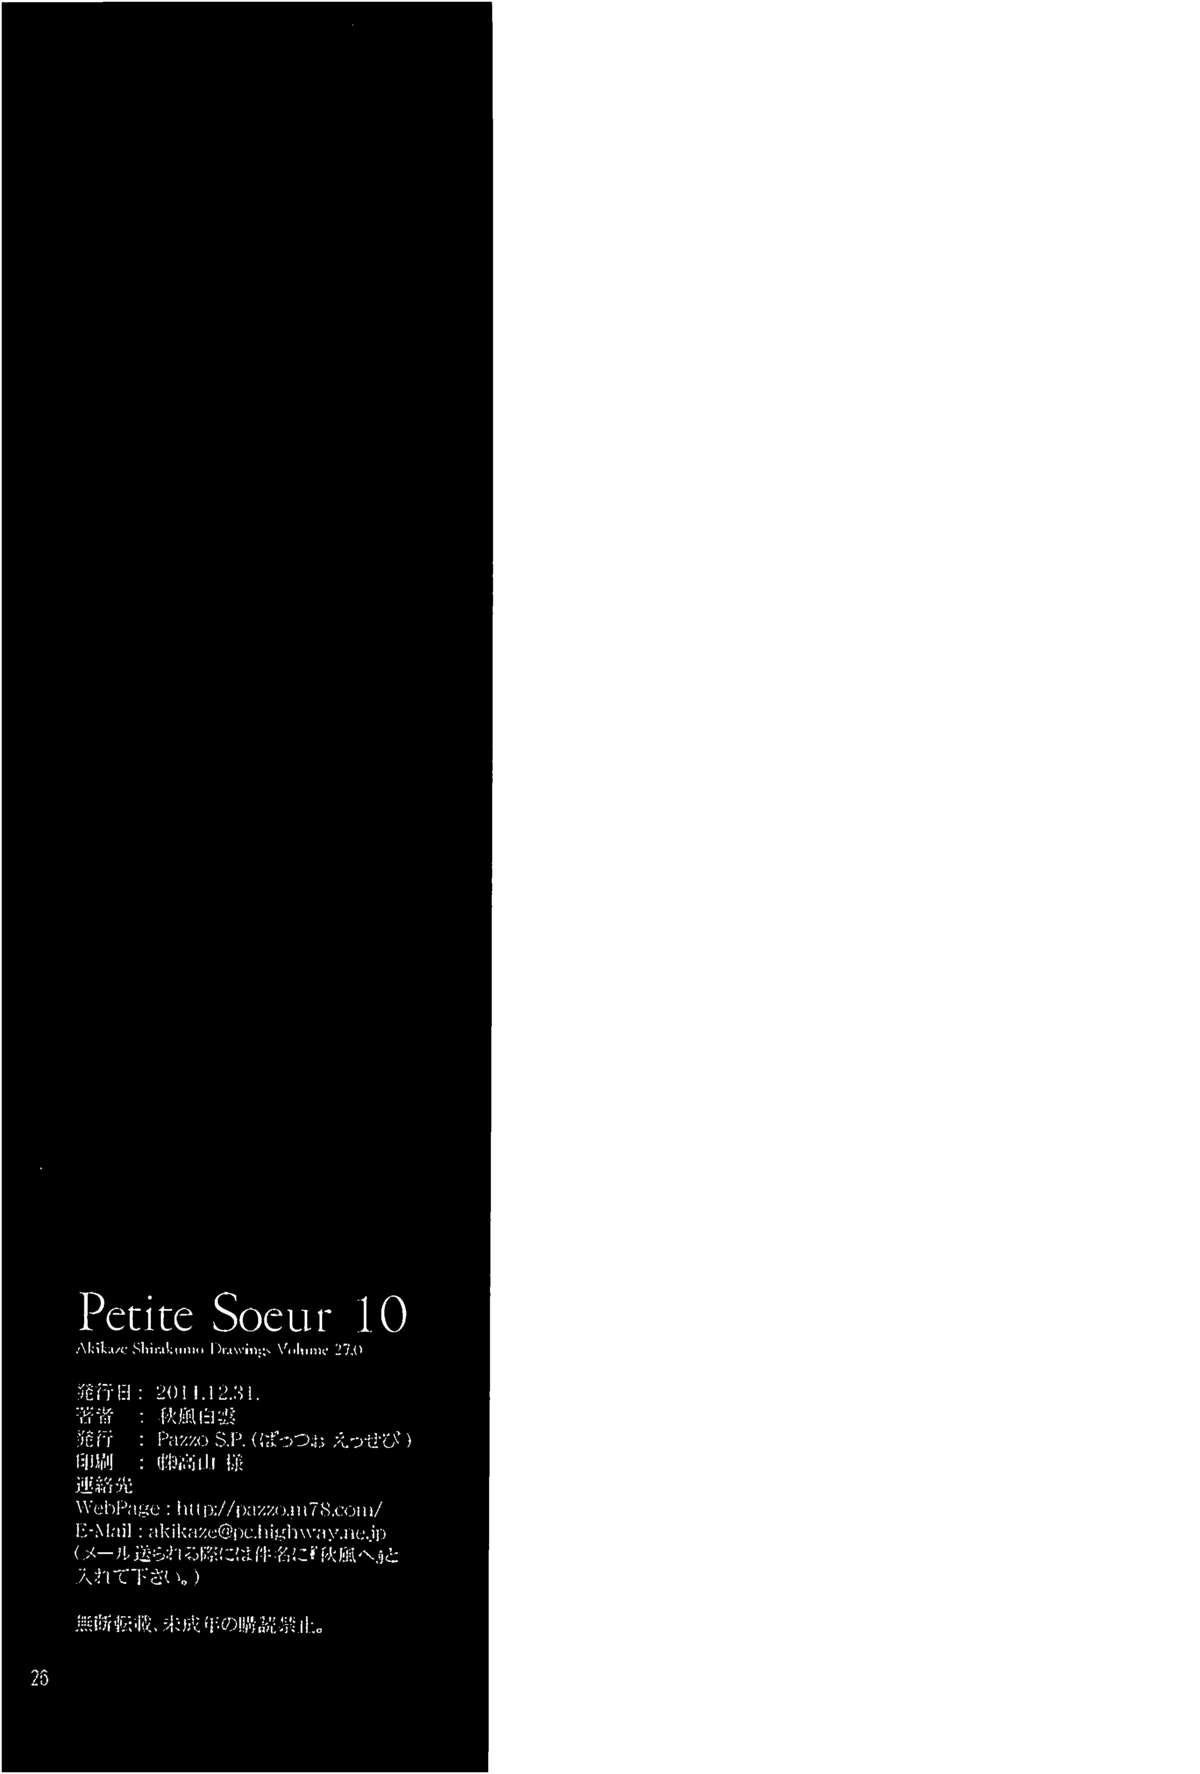 Hidden Camera Petite Soeur 10 - Ao no exorcist Denmark - Page 25